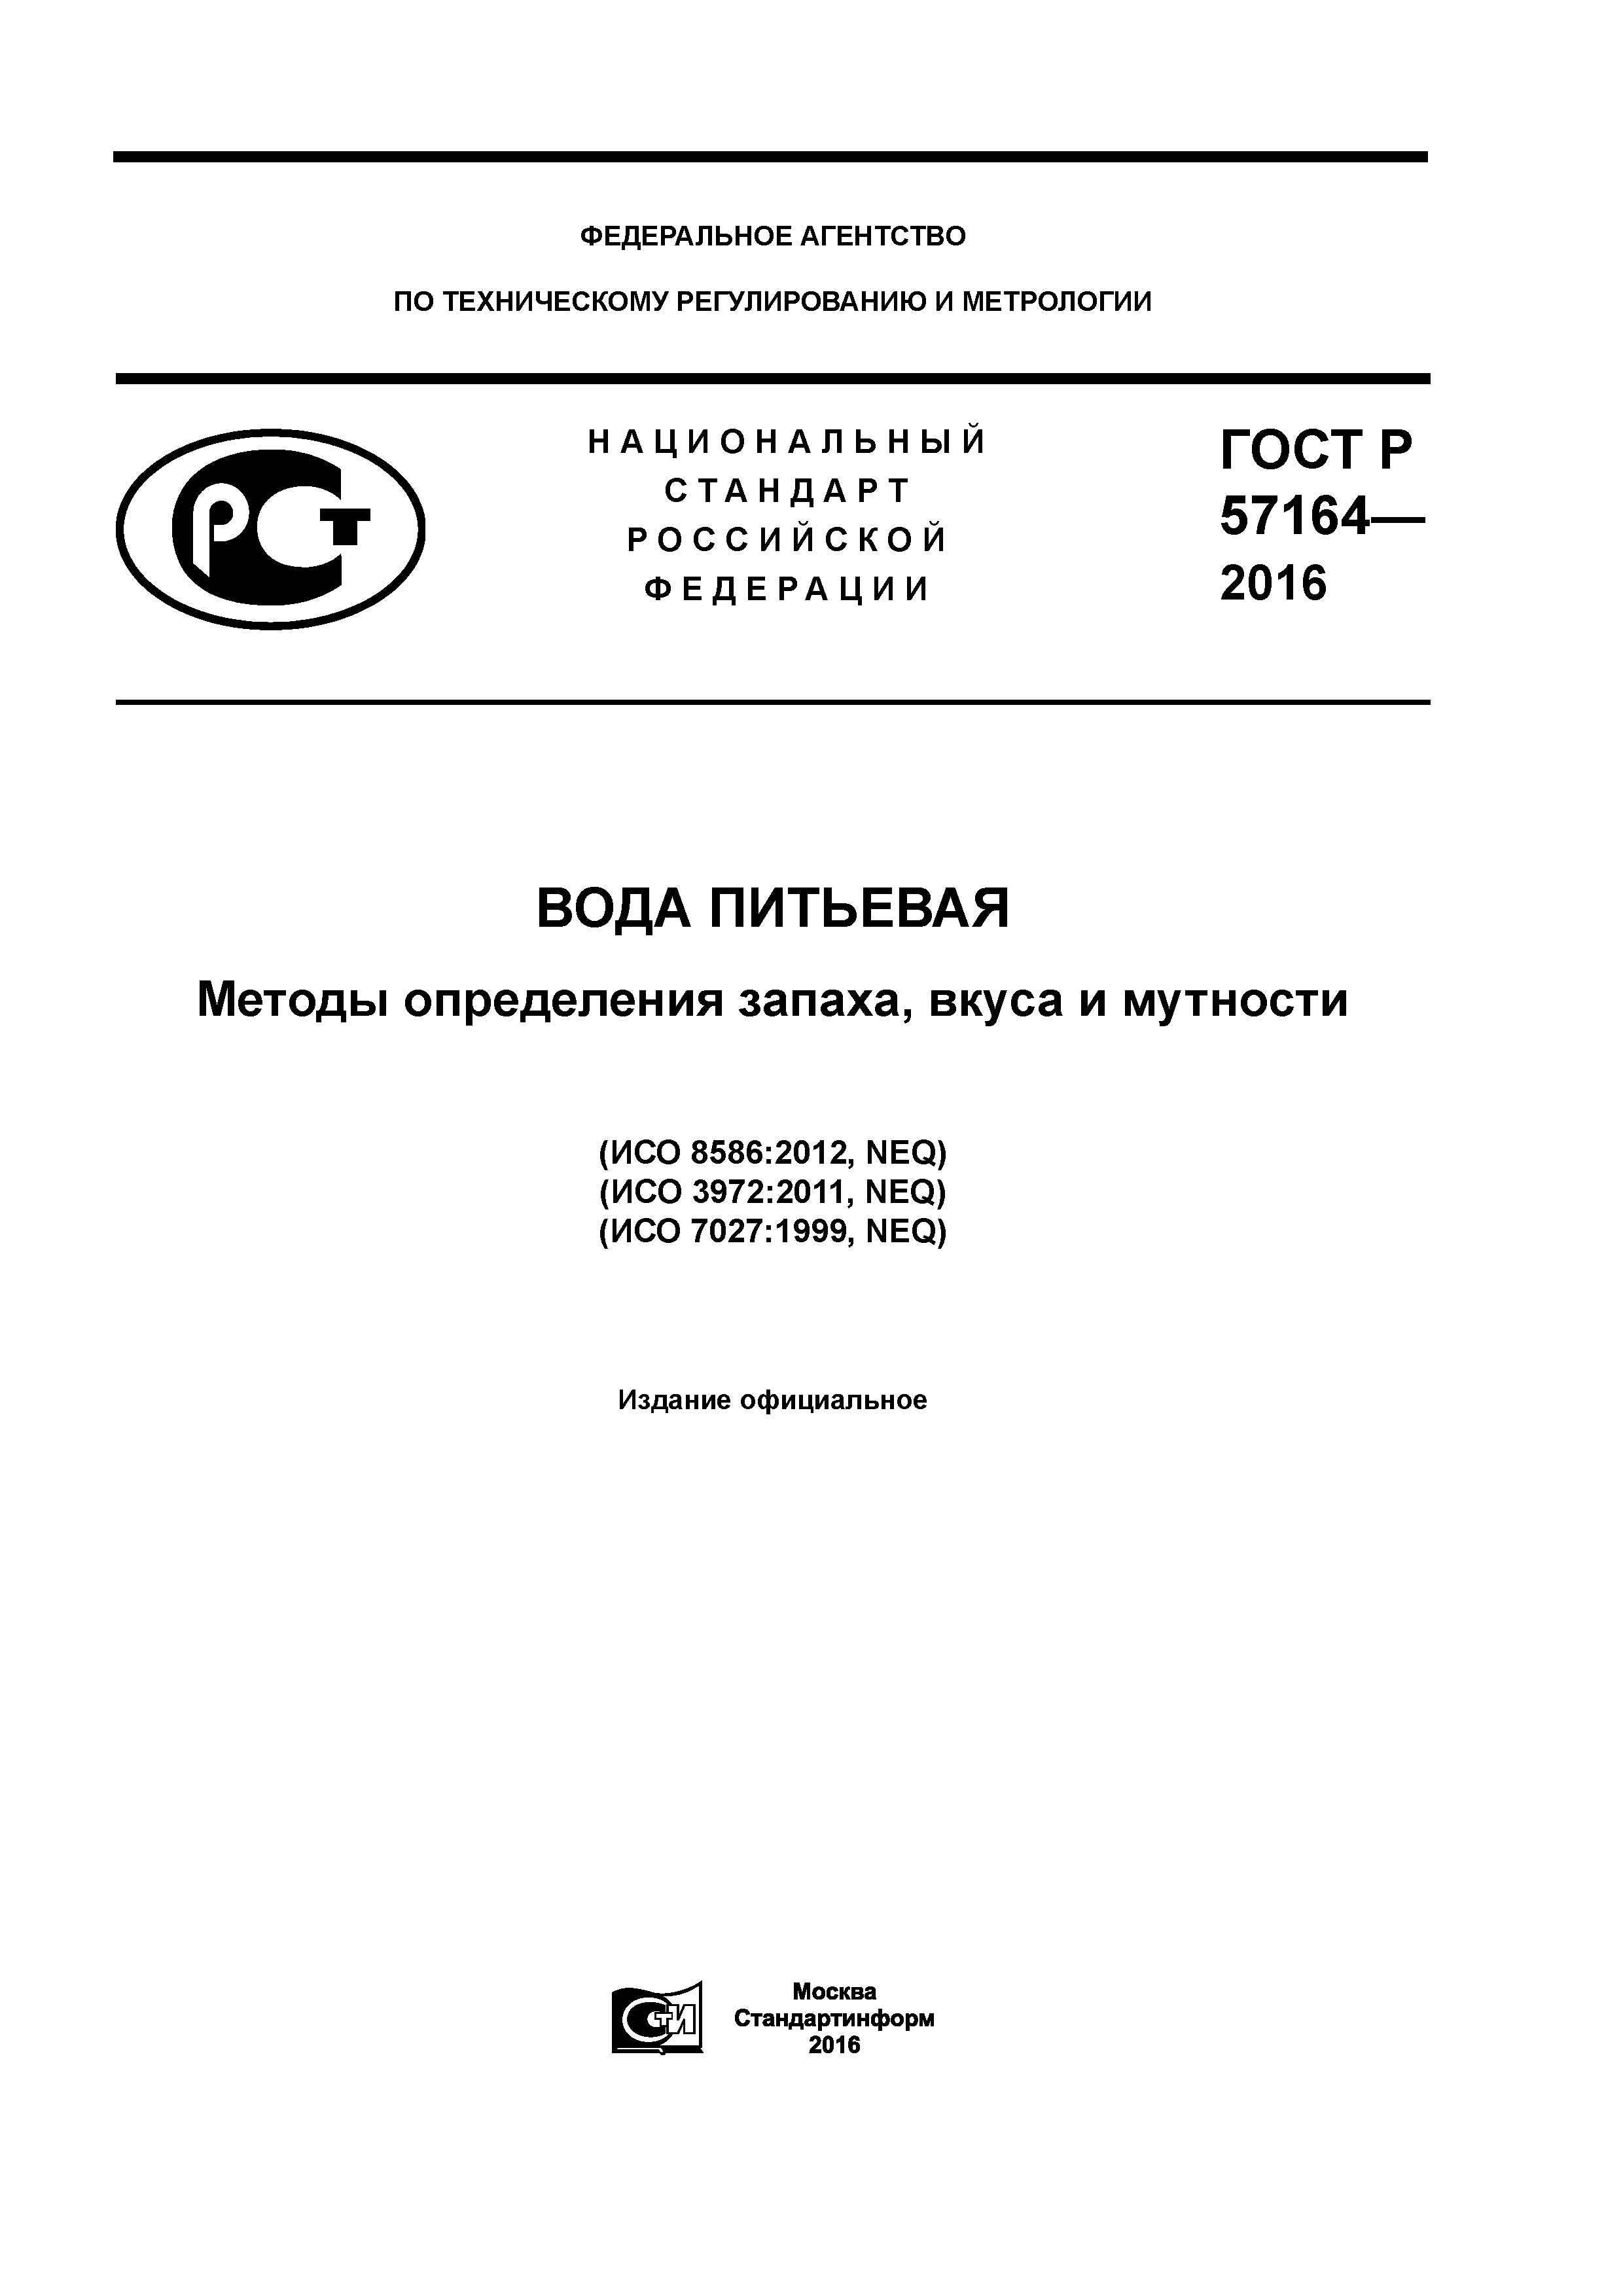 ГОСТ Р 57164-2016